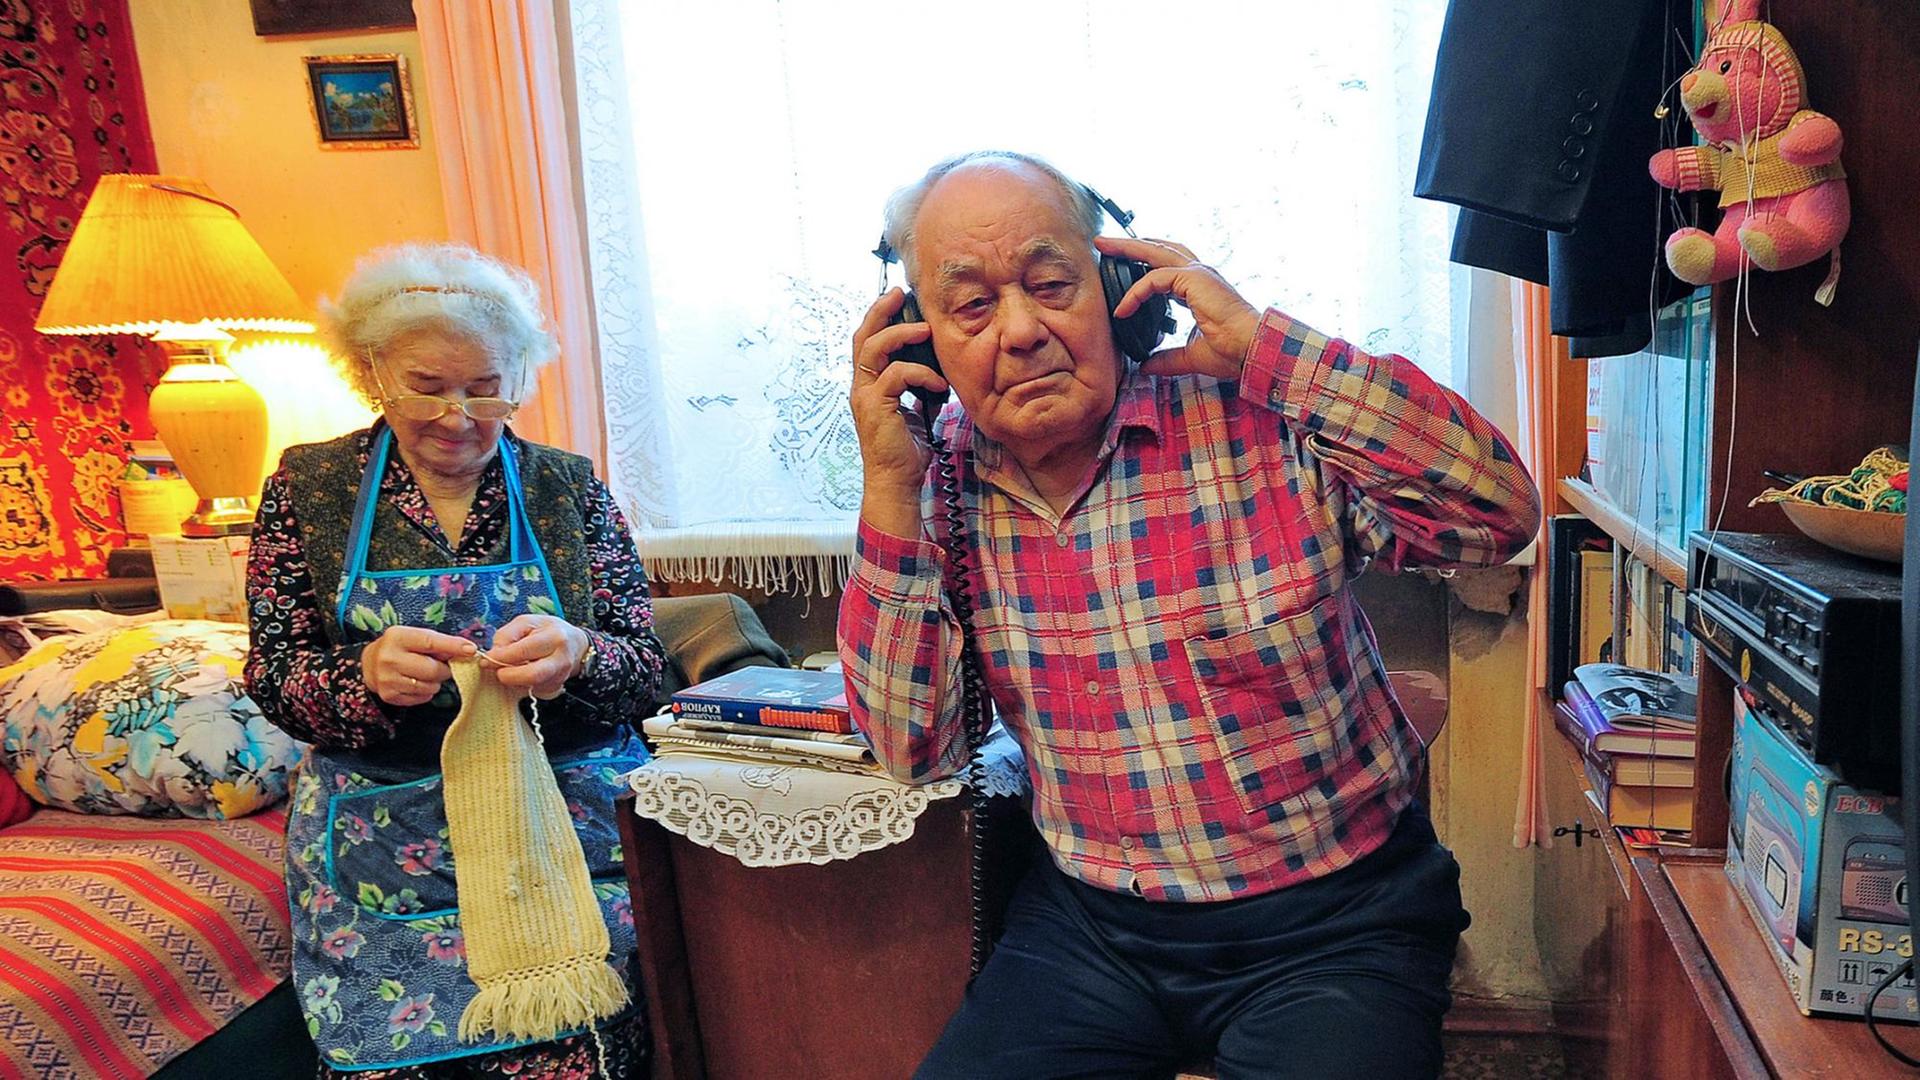 Ein älteres Ehepaar lauscht einen Radiobeitrag.